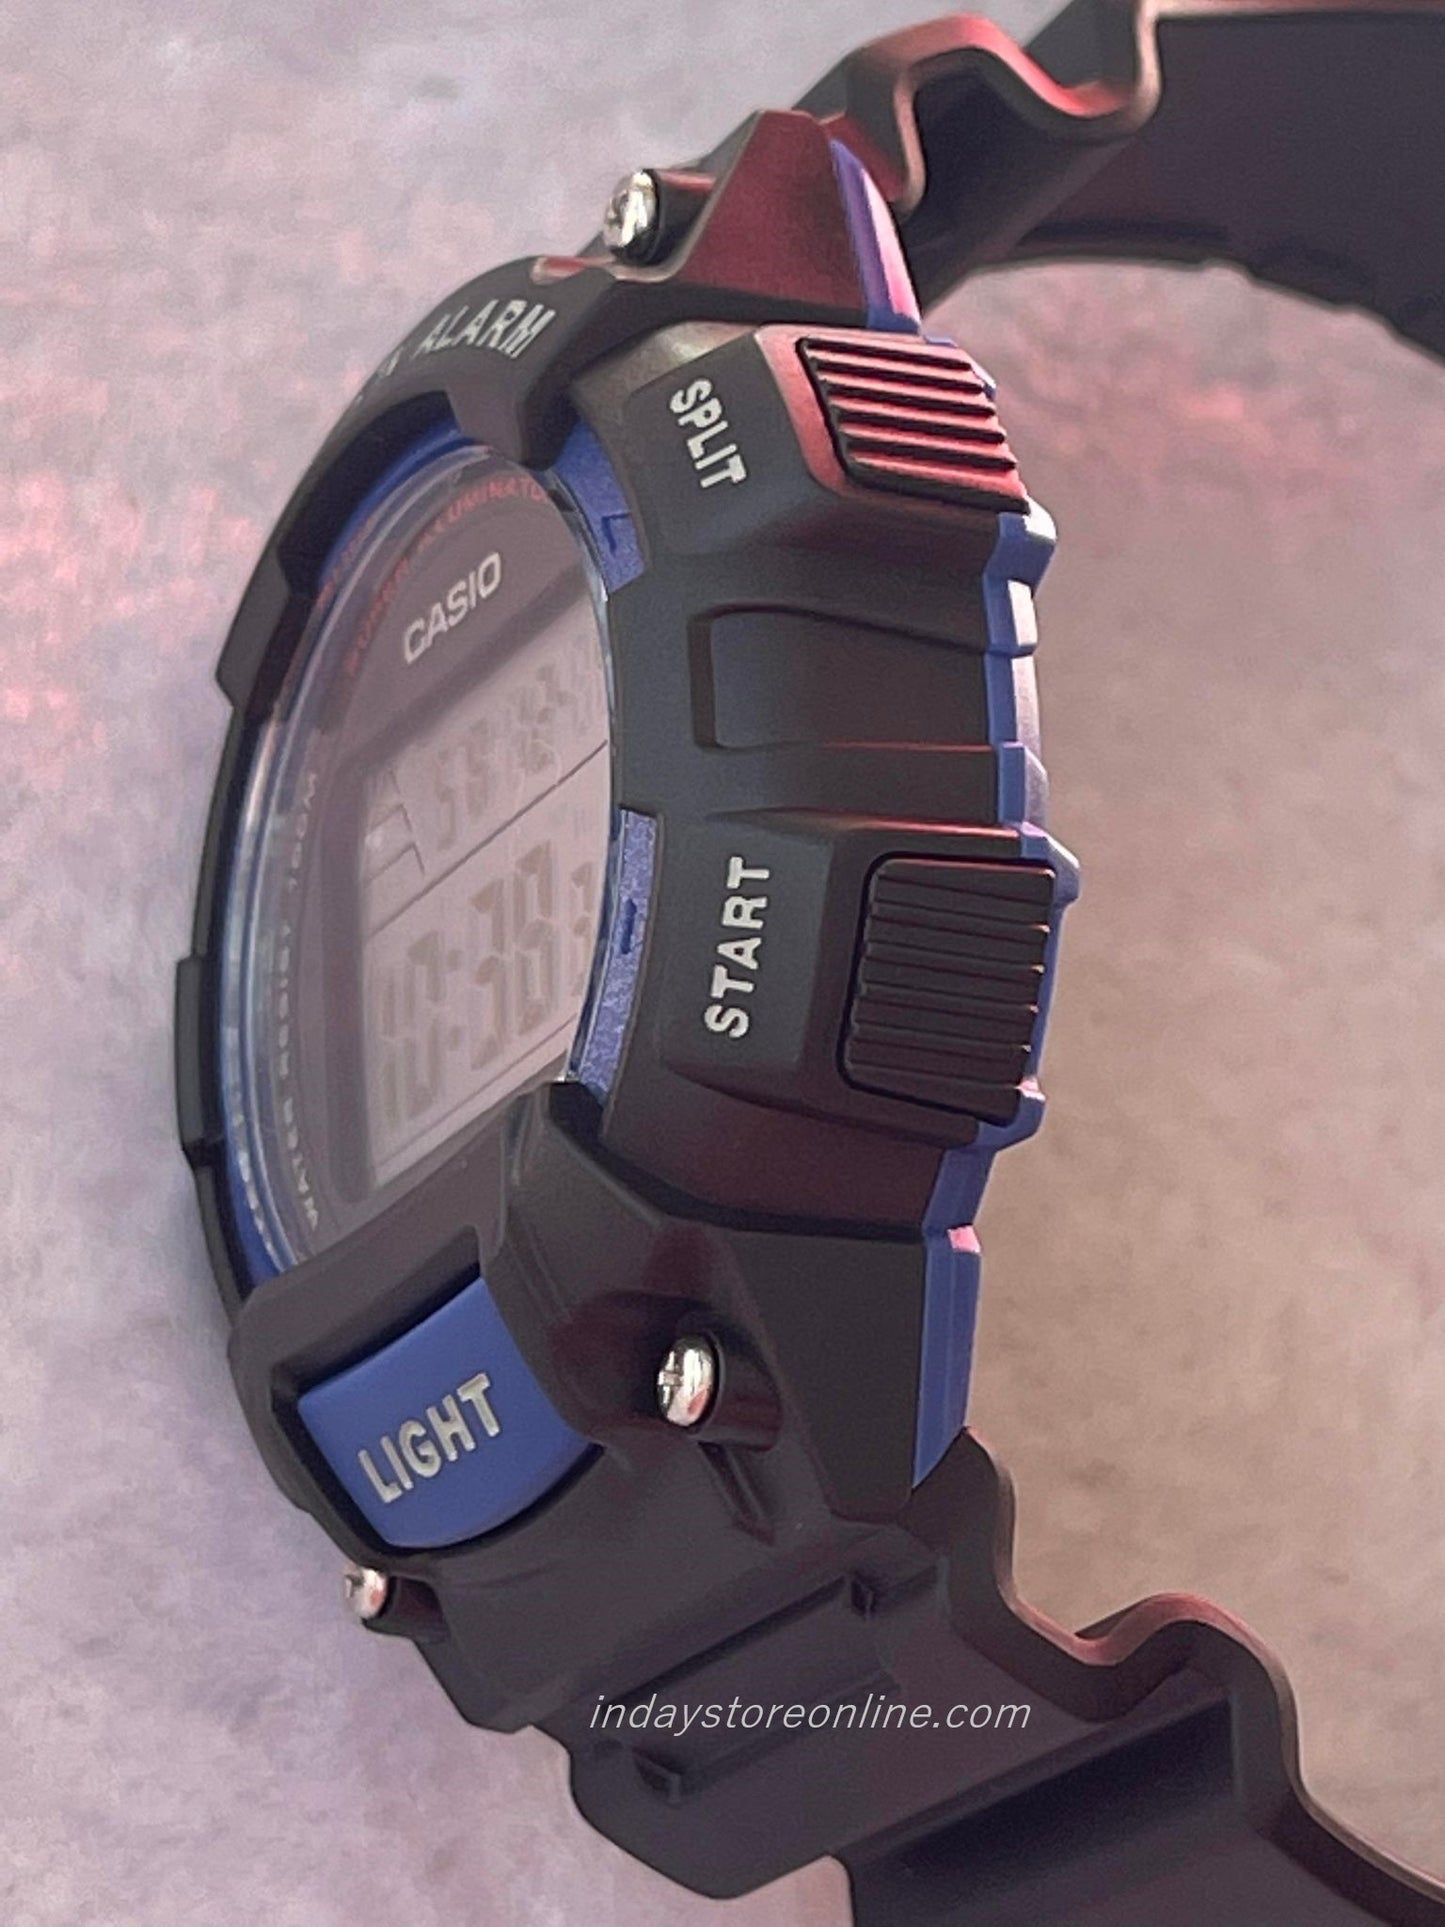 Casio Digital Men's Watch W-736H-2AV Digital Sporty Design Resin Band Resin Glass Battery Life: 10 years